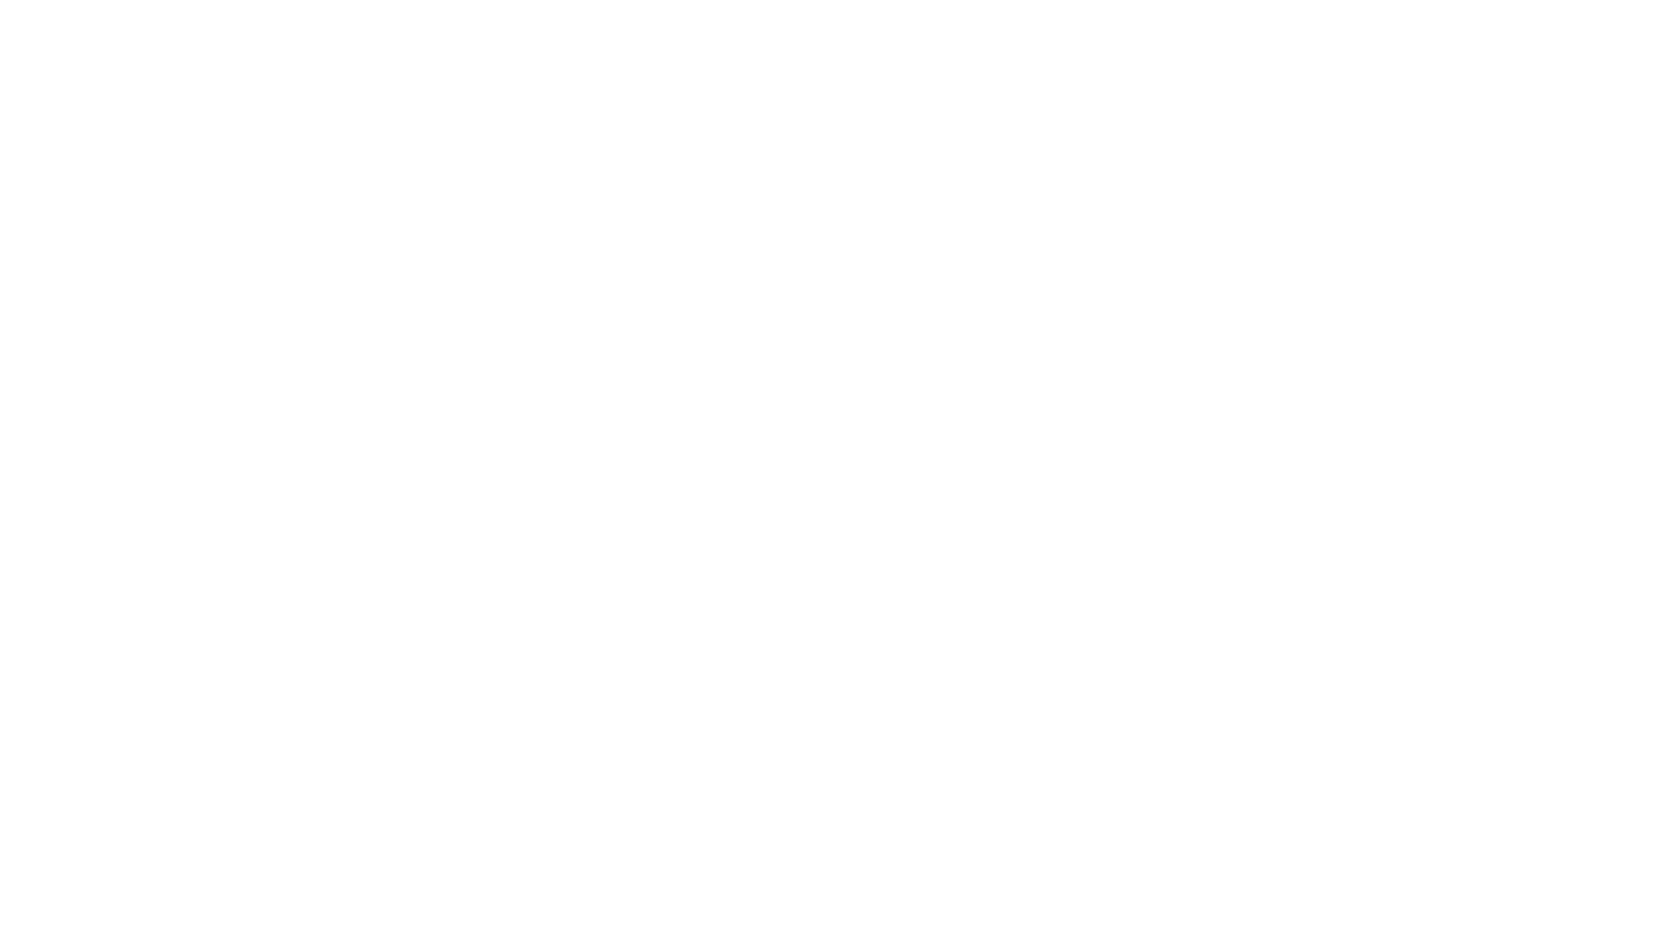 Global Coalition For OSH